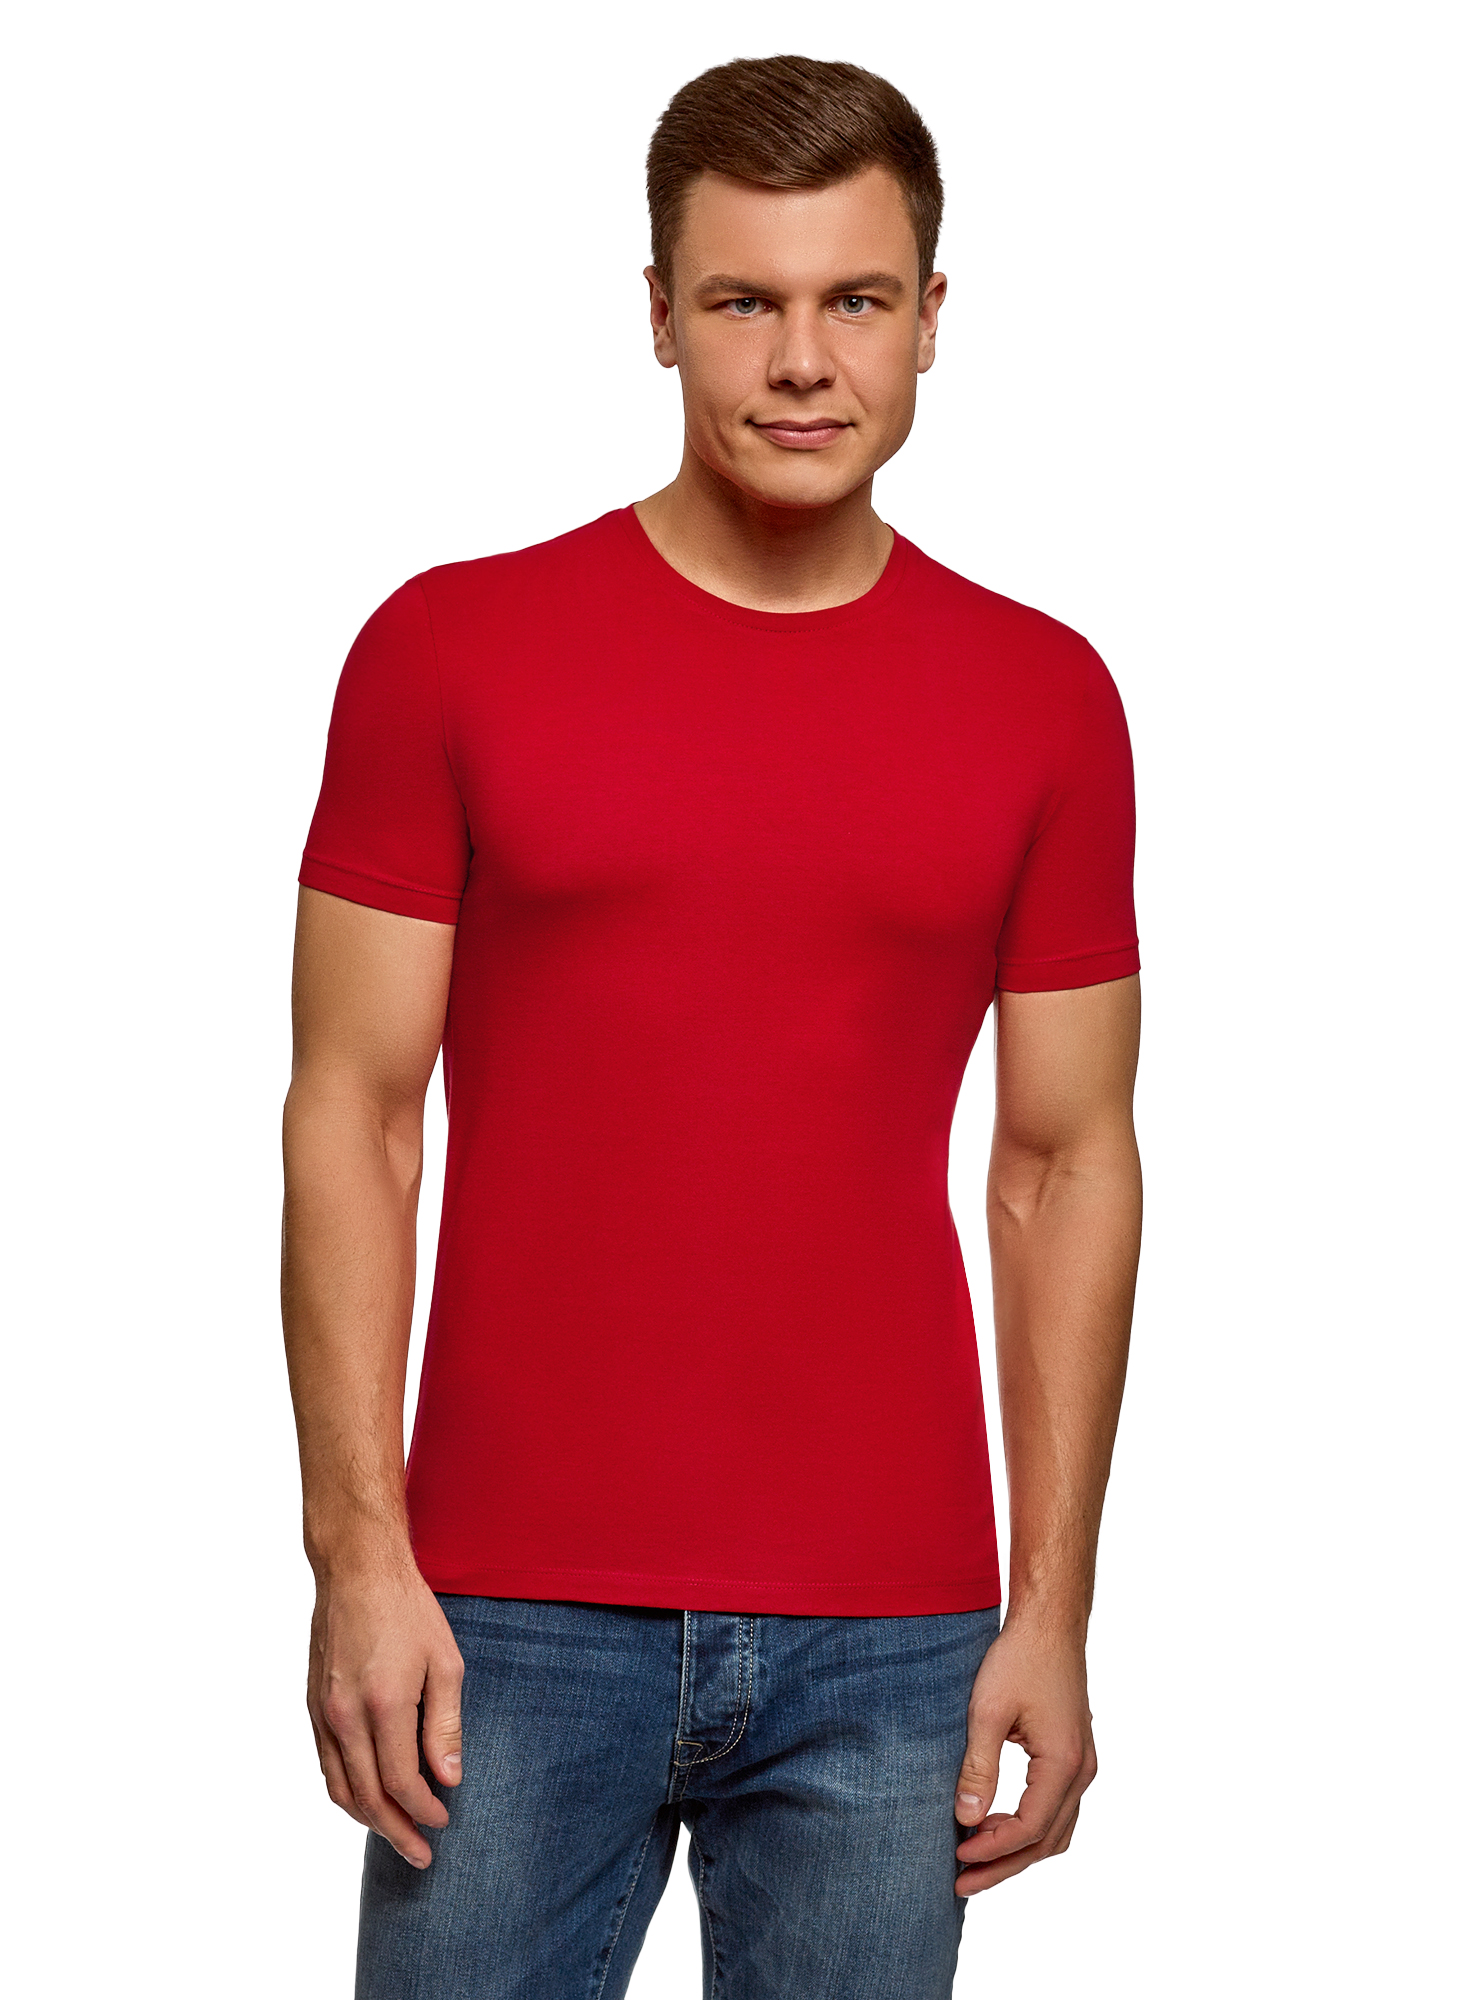 Красная футболка на мужчине